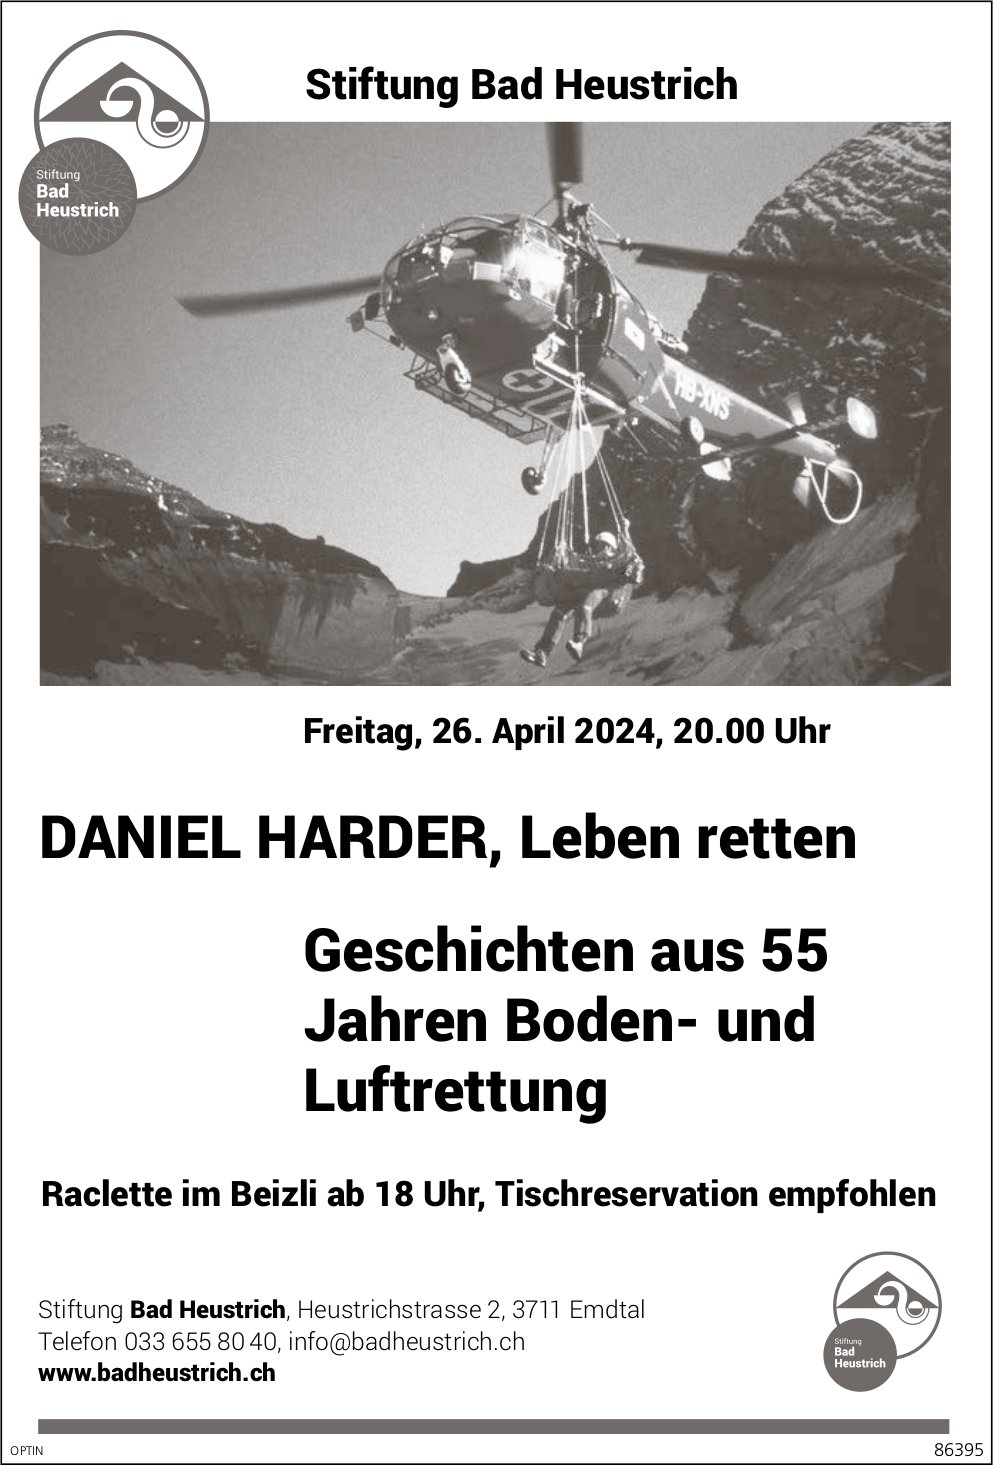 Daniel Harder, Leben retten, 26. April, Stiftung Bad Heustrich, Emdtal